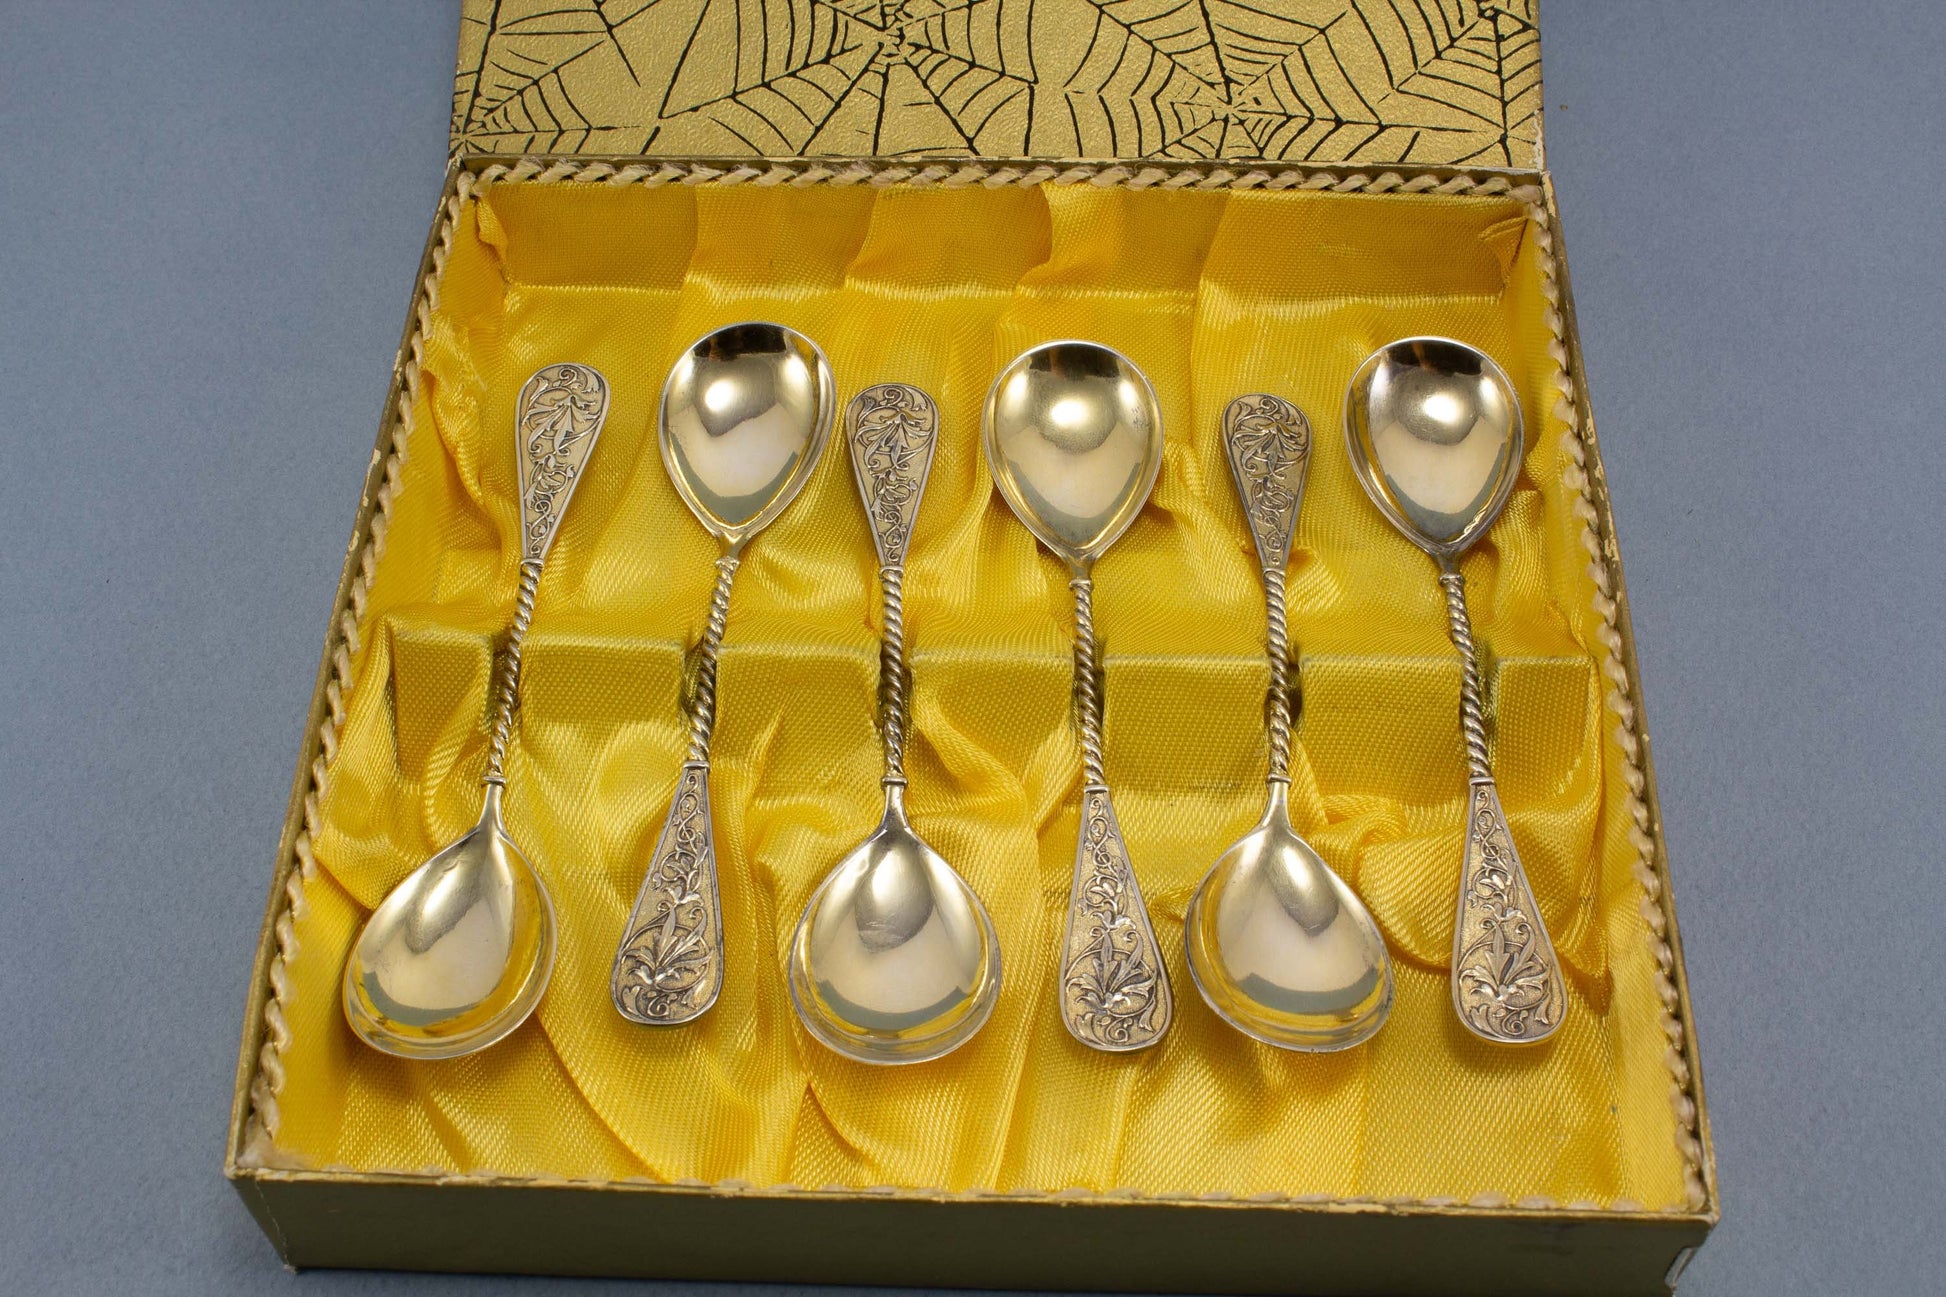 6 antike Eierlöffel aus 800er Silber, vergoldet, florales Jugendstil Muster, um 1900, Silberbesteck, M.J. Rückert